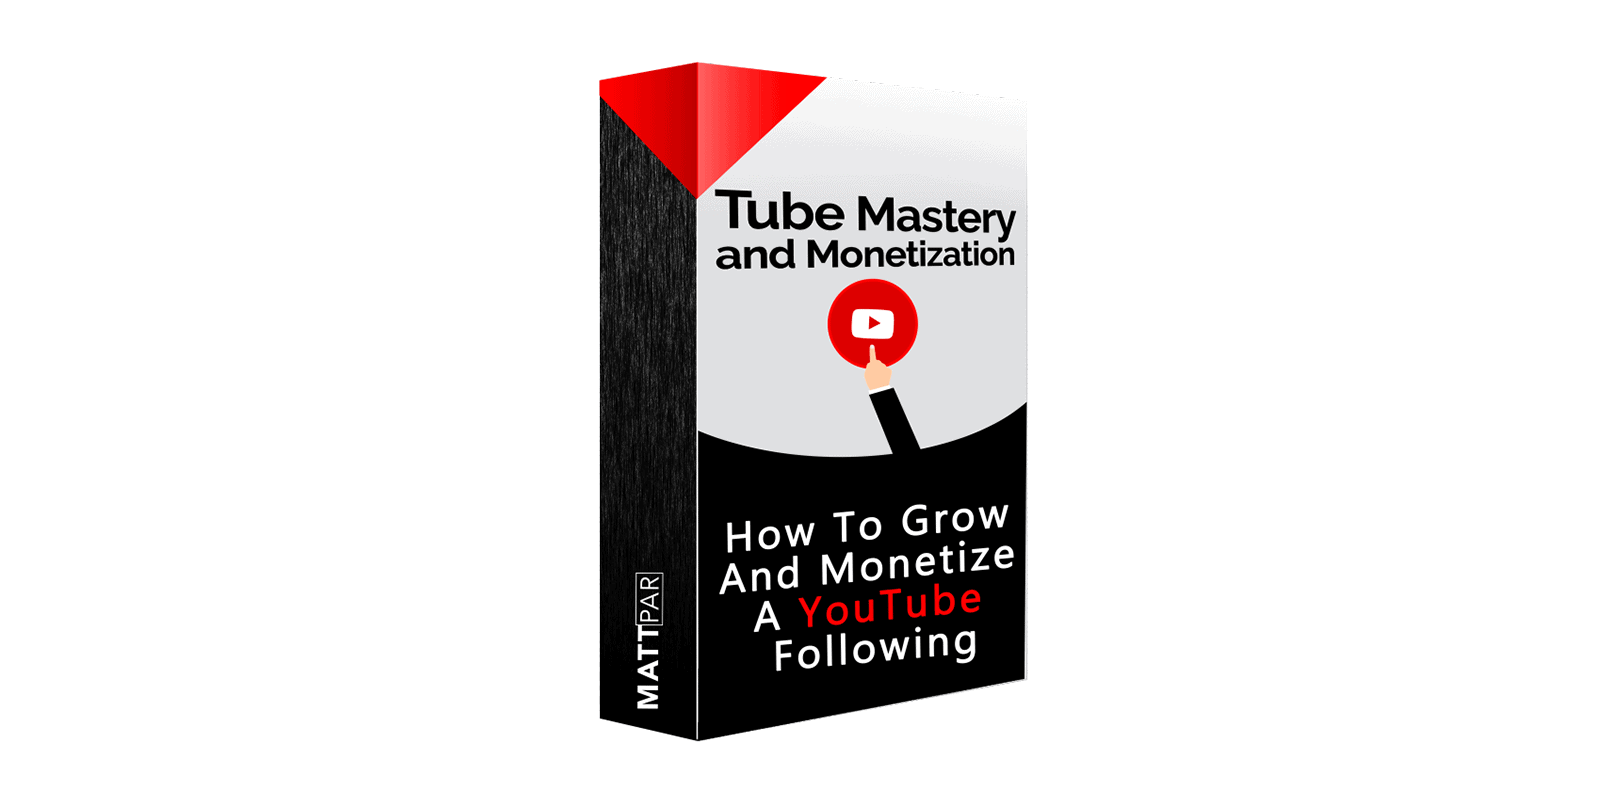 Tube Mastery And Monetization reviews